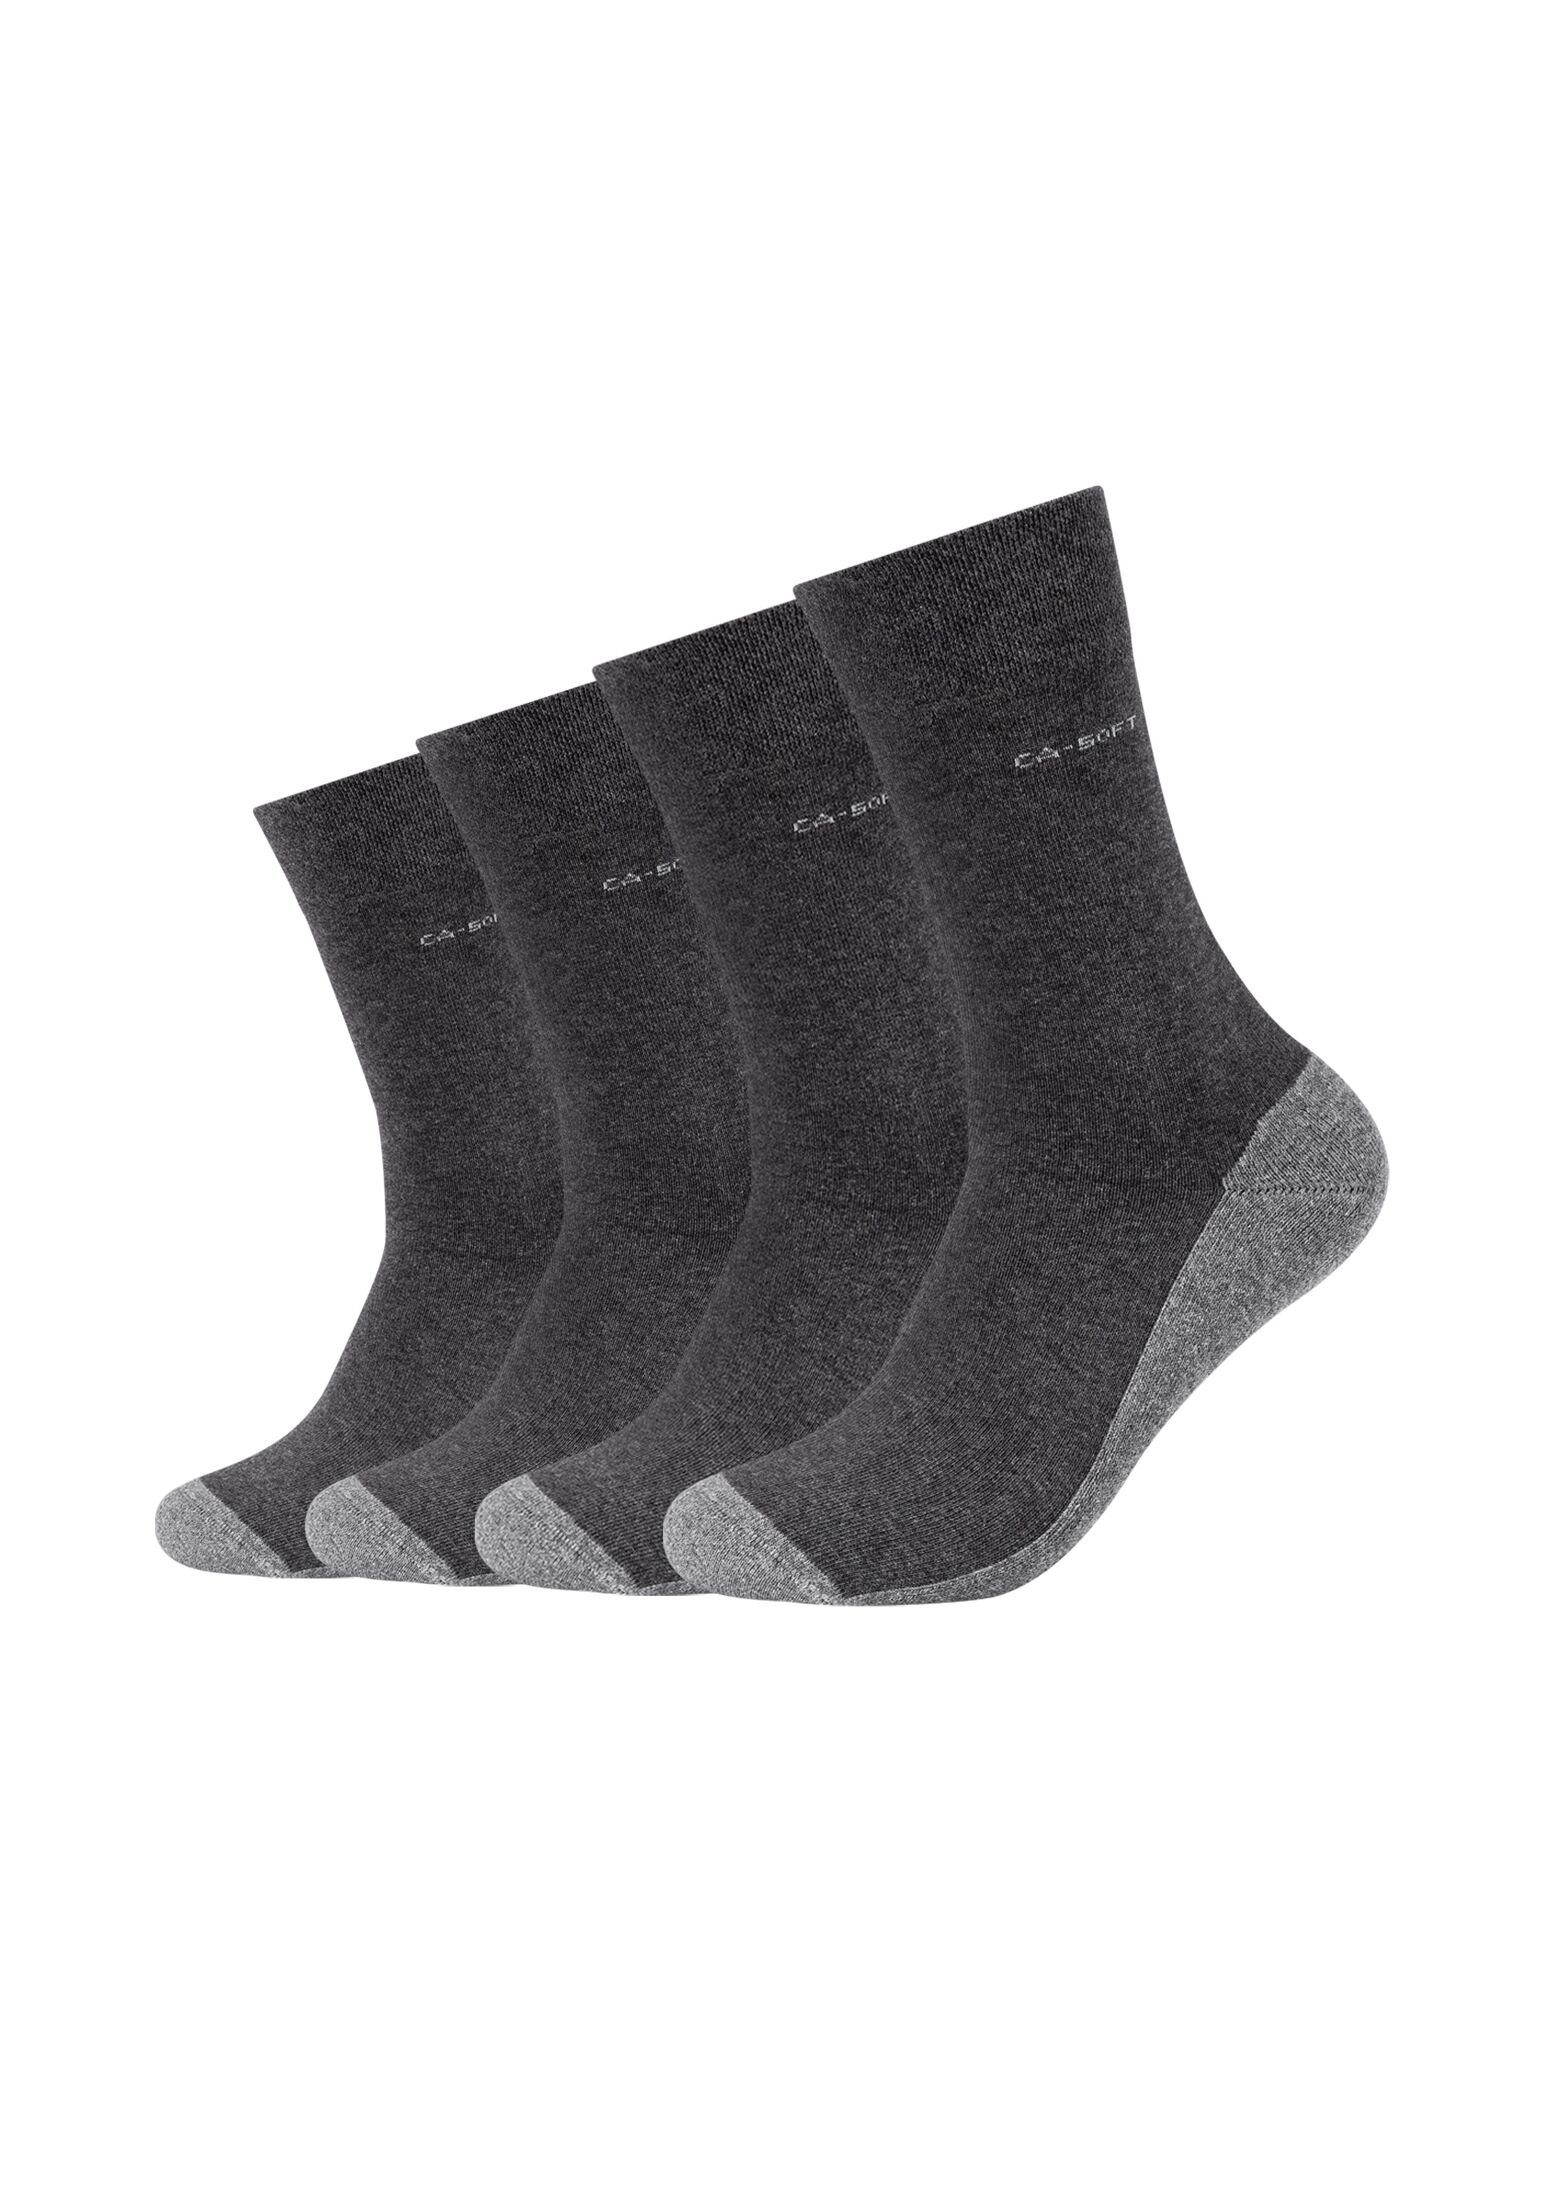 Camano Socken Socken 4er Pack dark grey melange